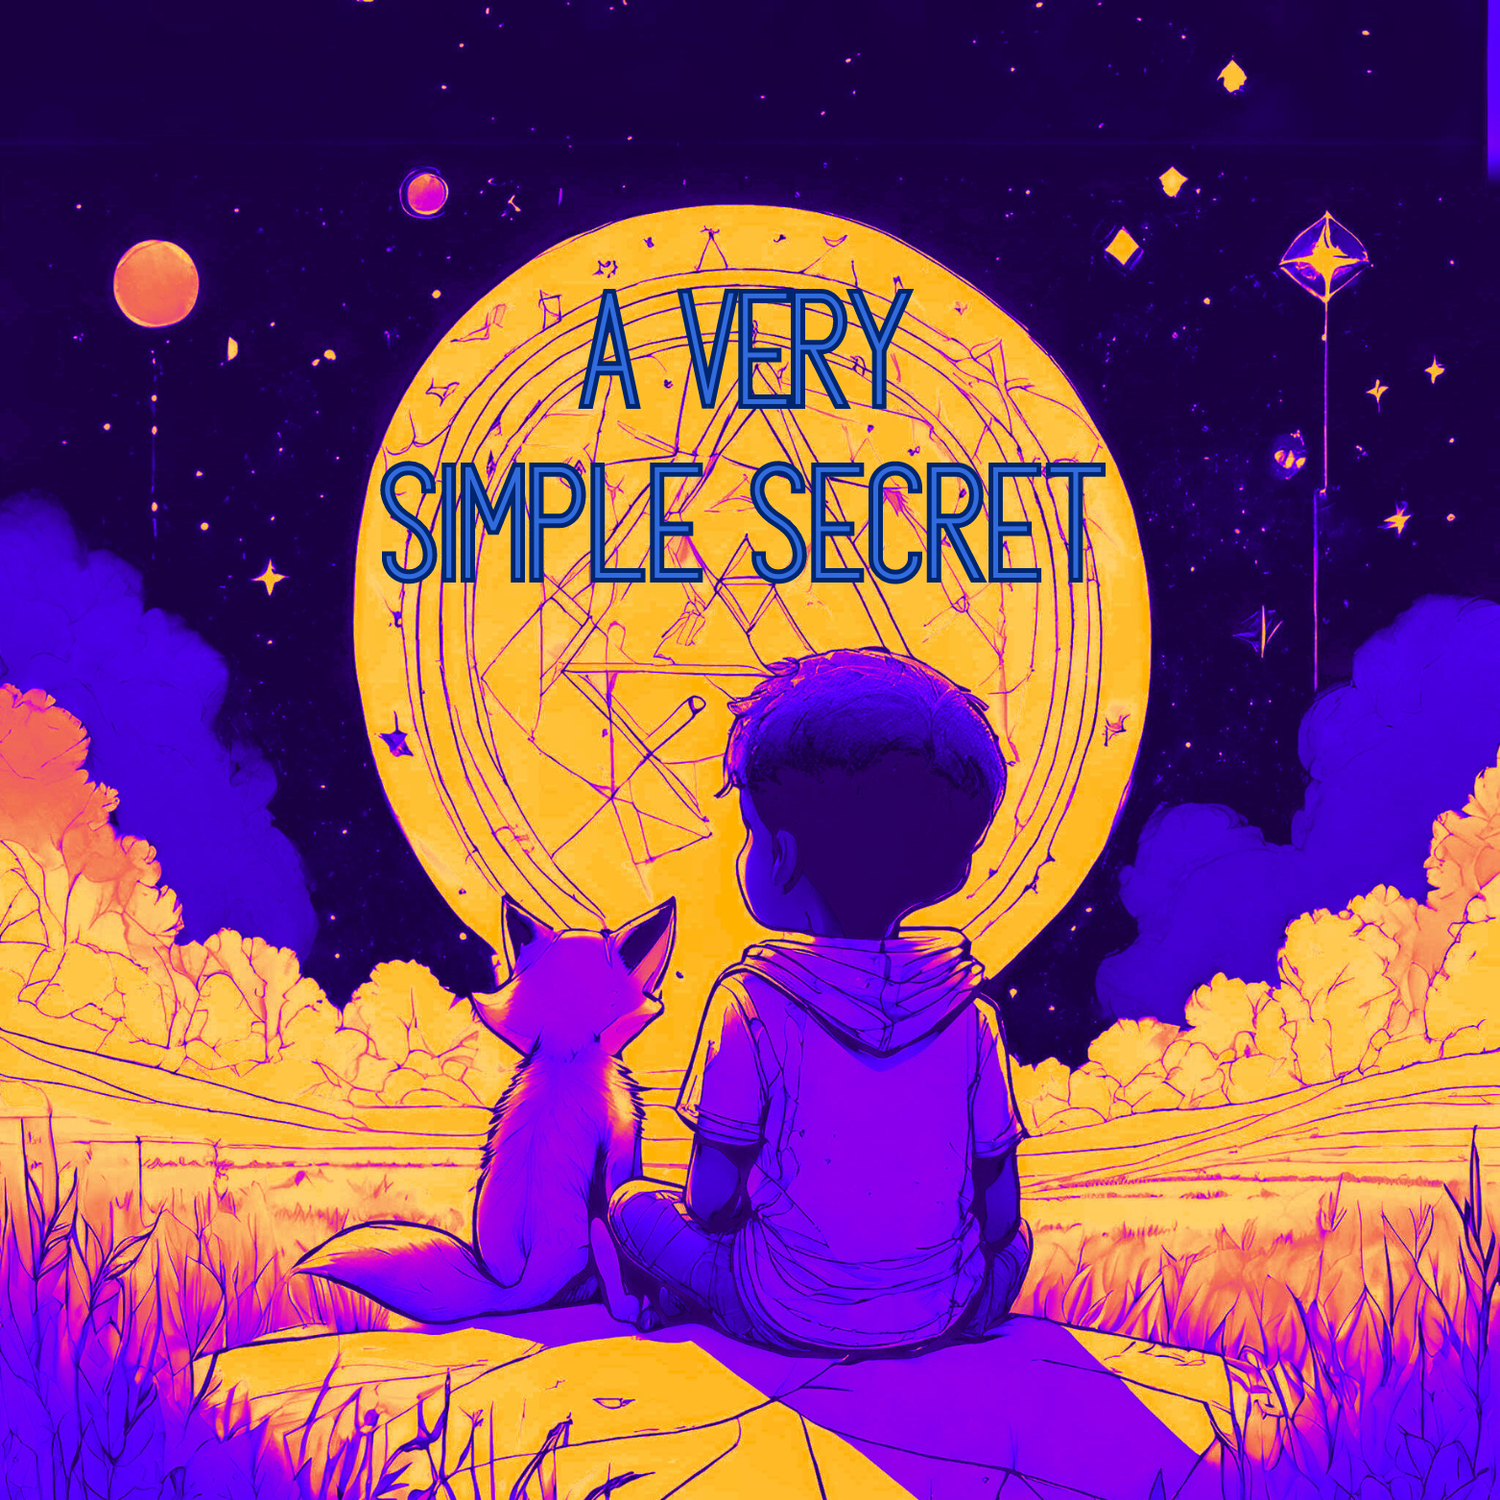 A Very Simple Secret